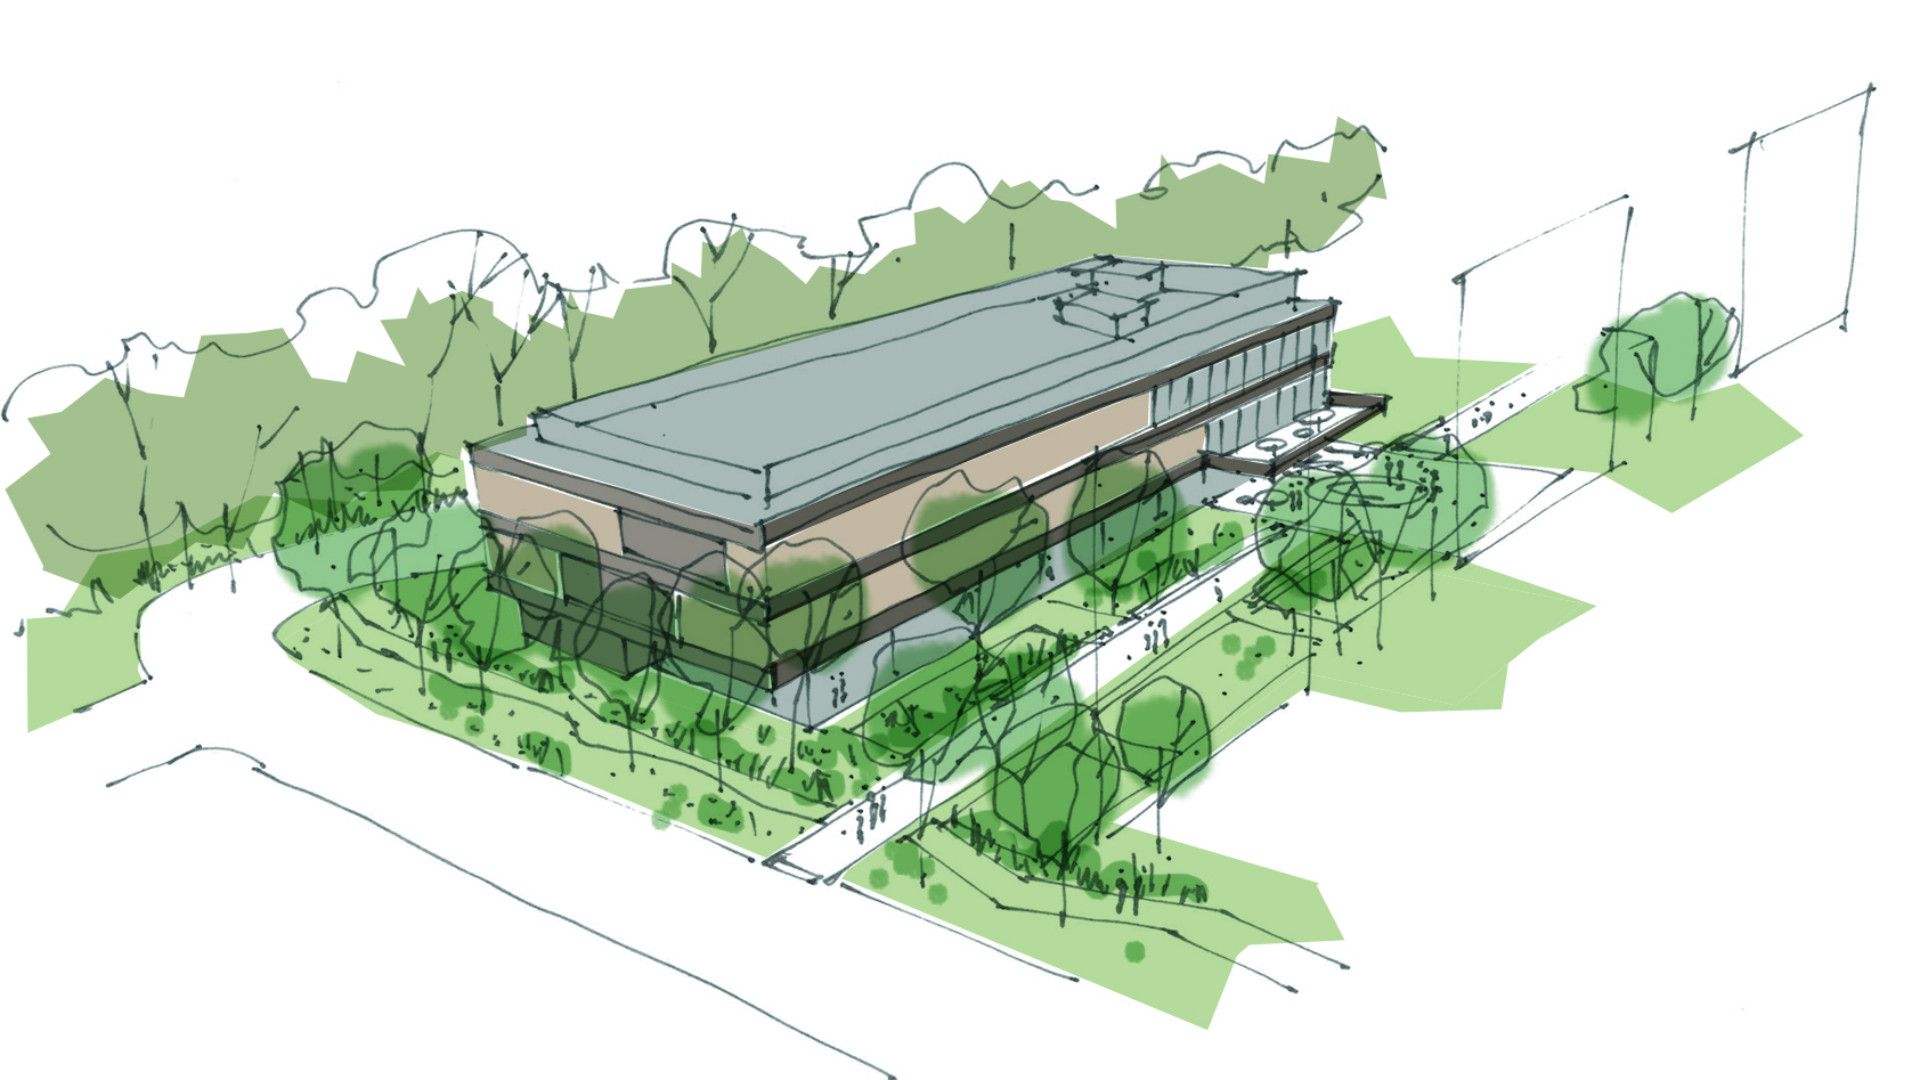 Illustration of the facility building, developed during the conceptual design phase. Credit: Tegnestuen Kontekst ApS.